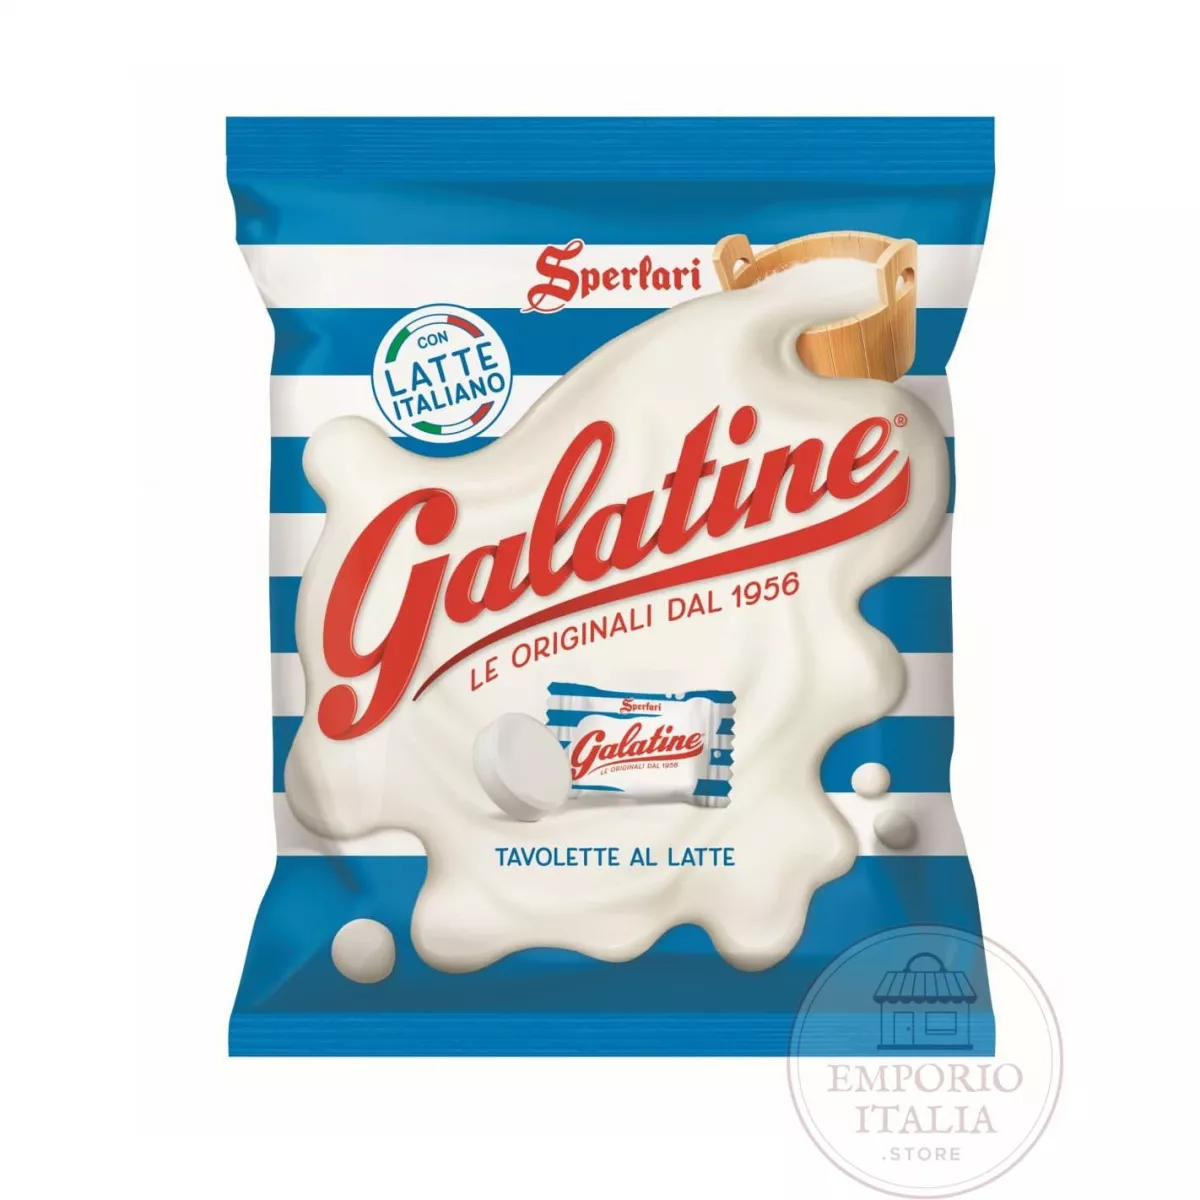 Galatine Sperlari cu Lapte